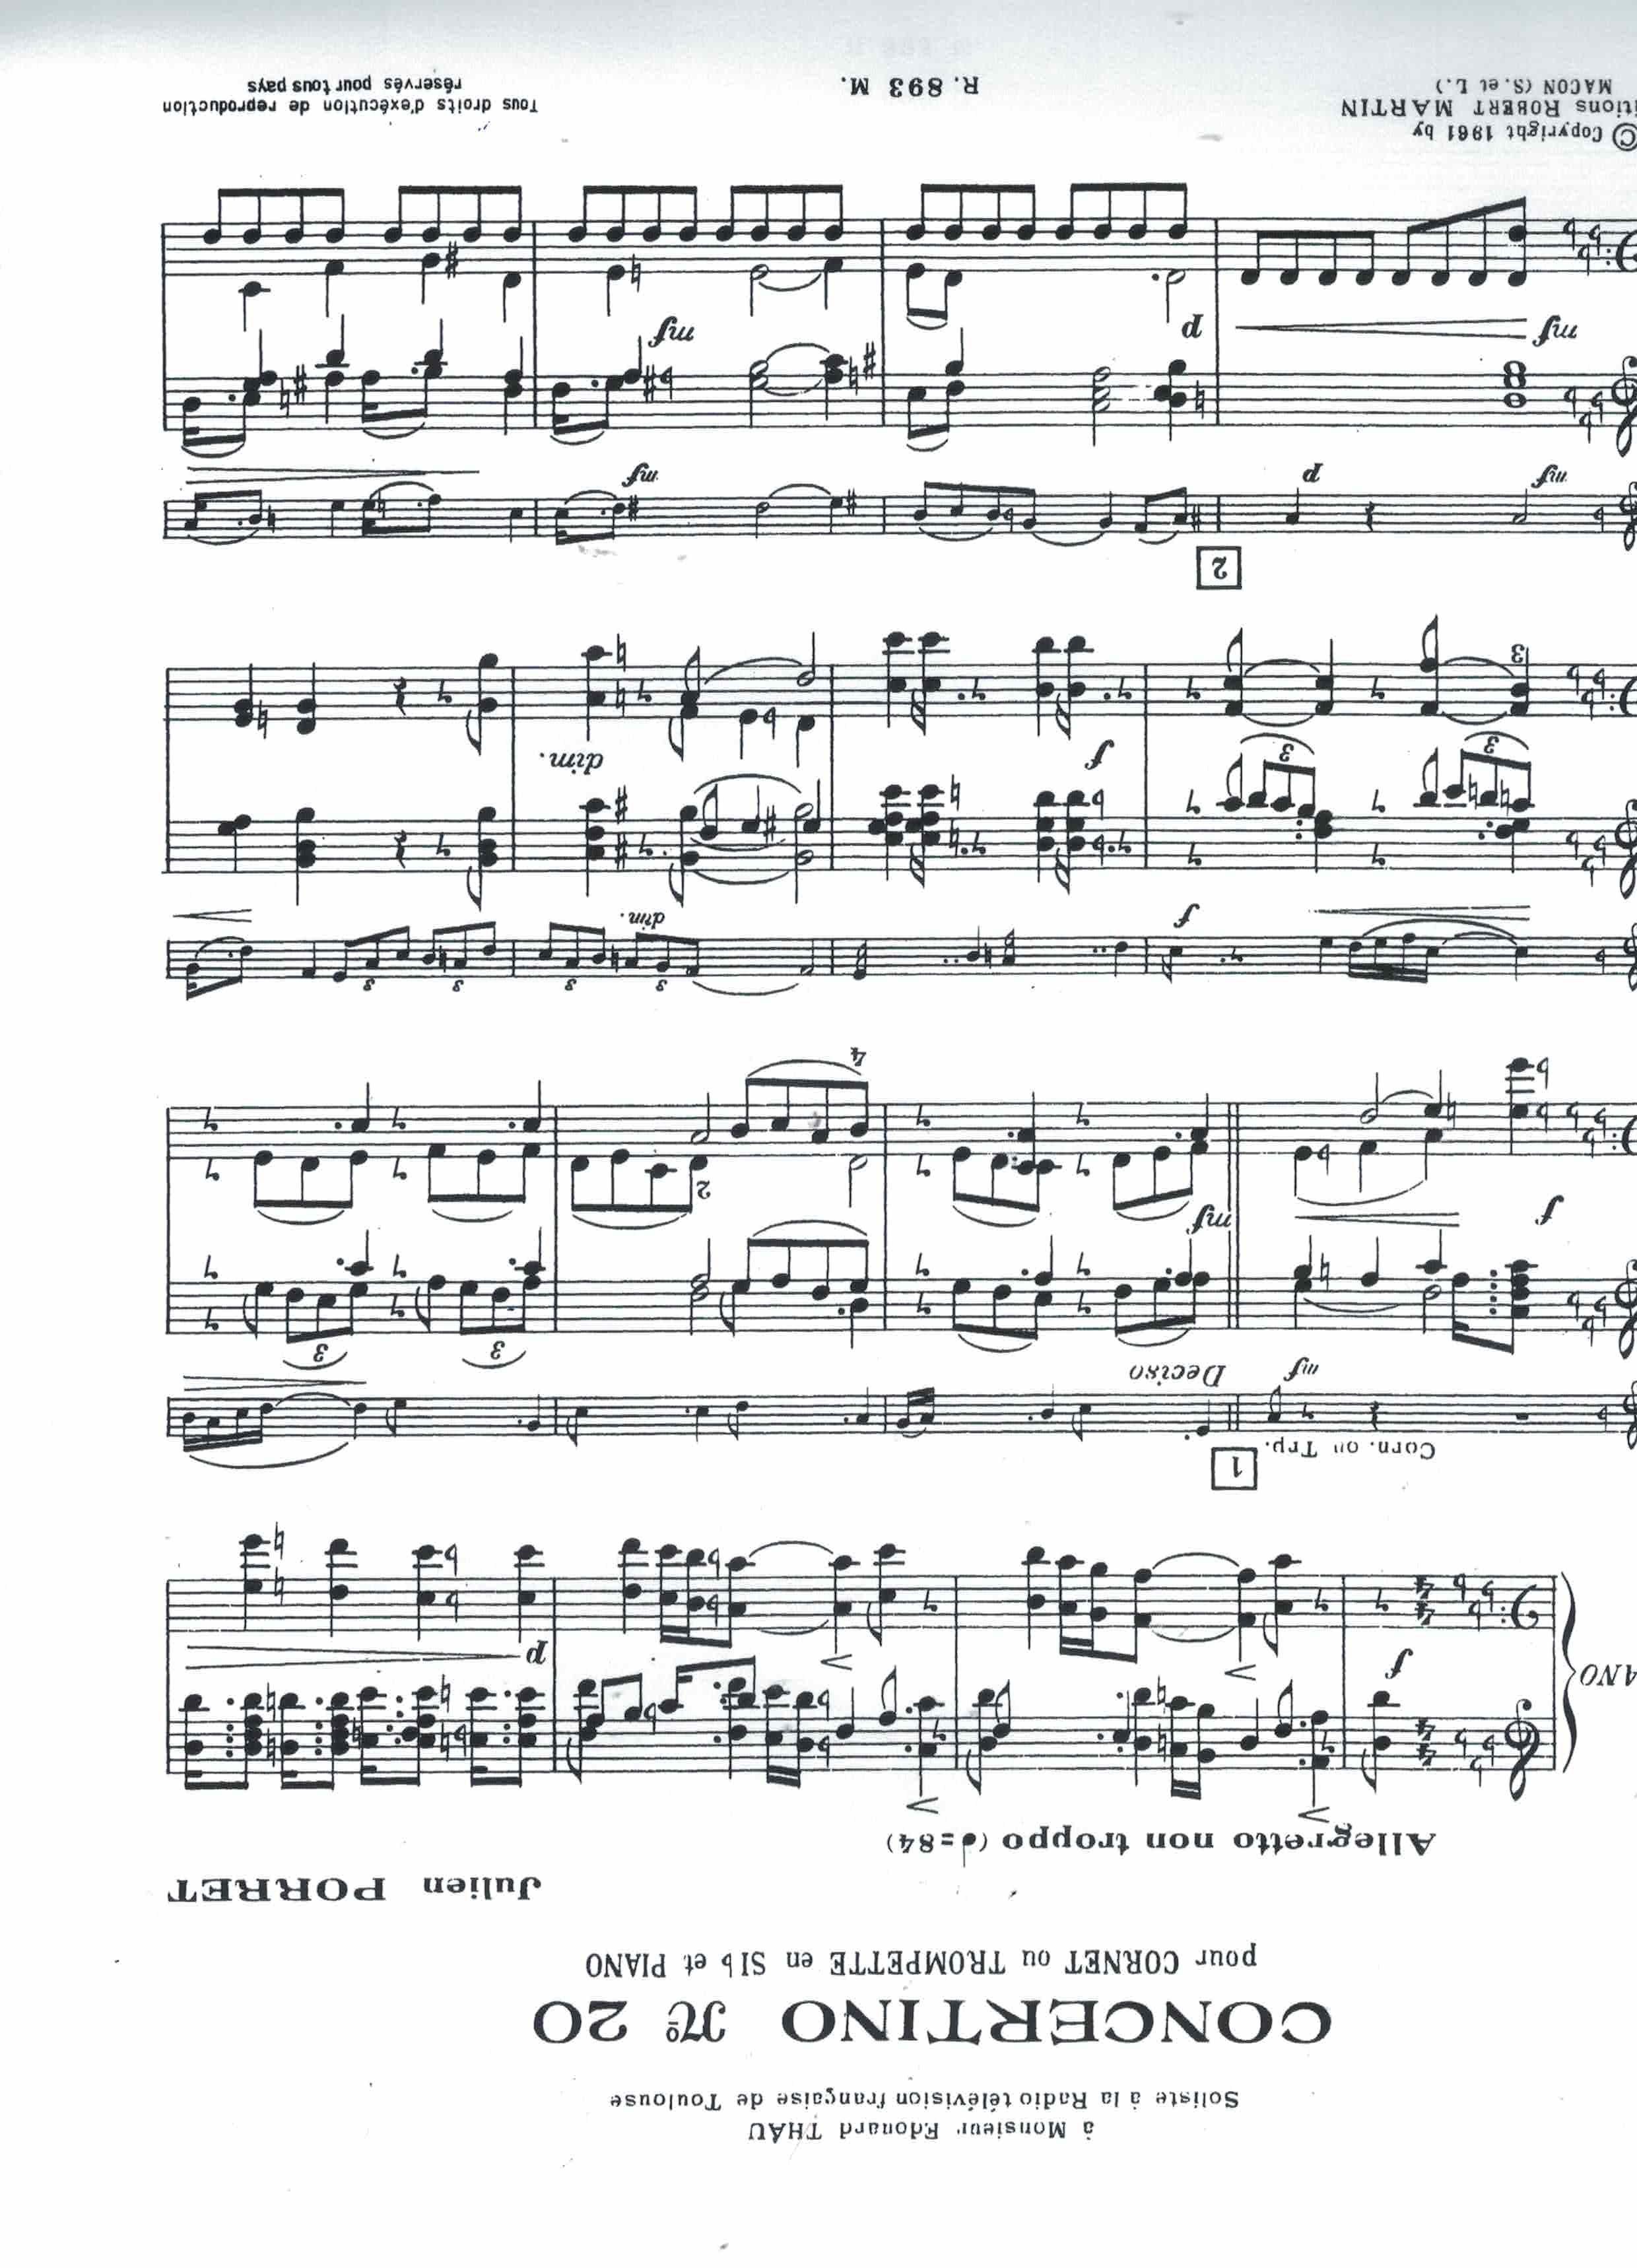 Concertino 20 - Porret, Trompete/Klavier